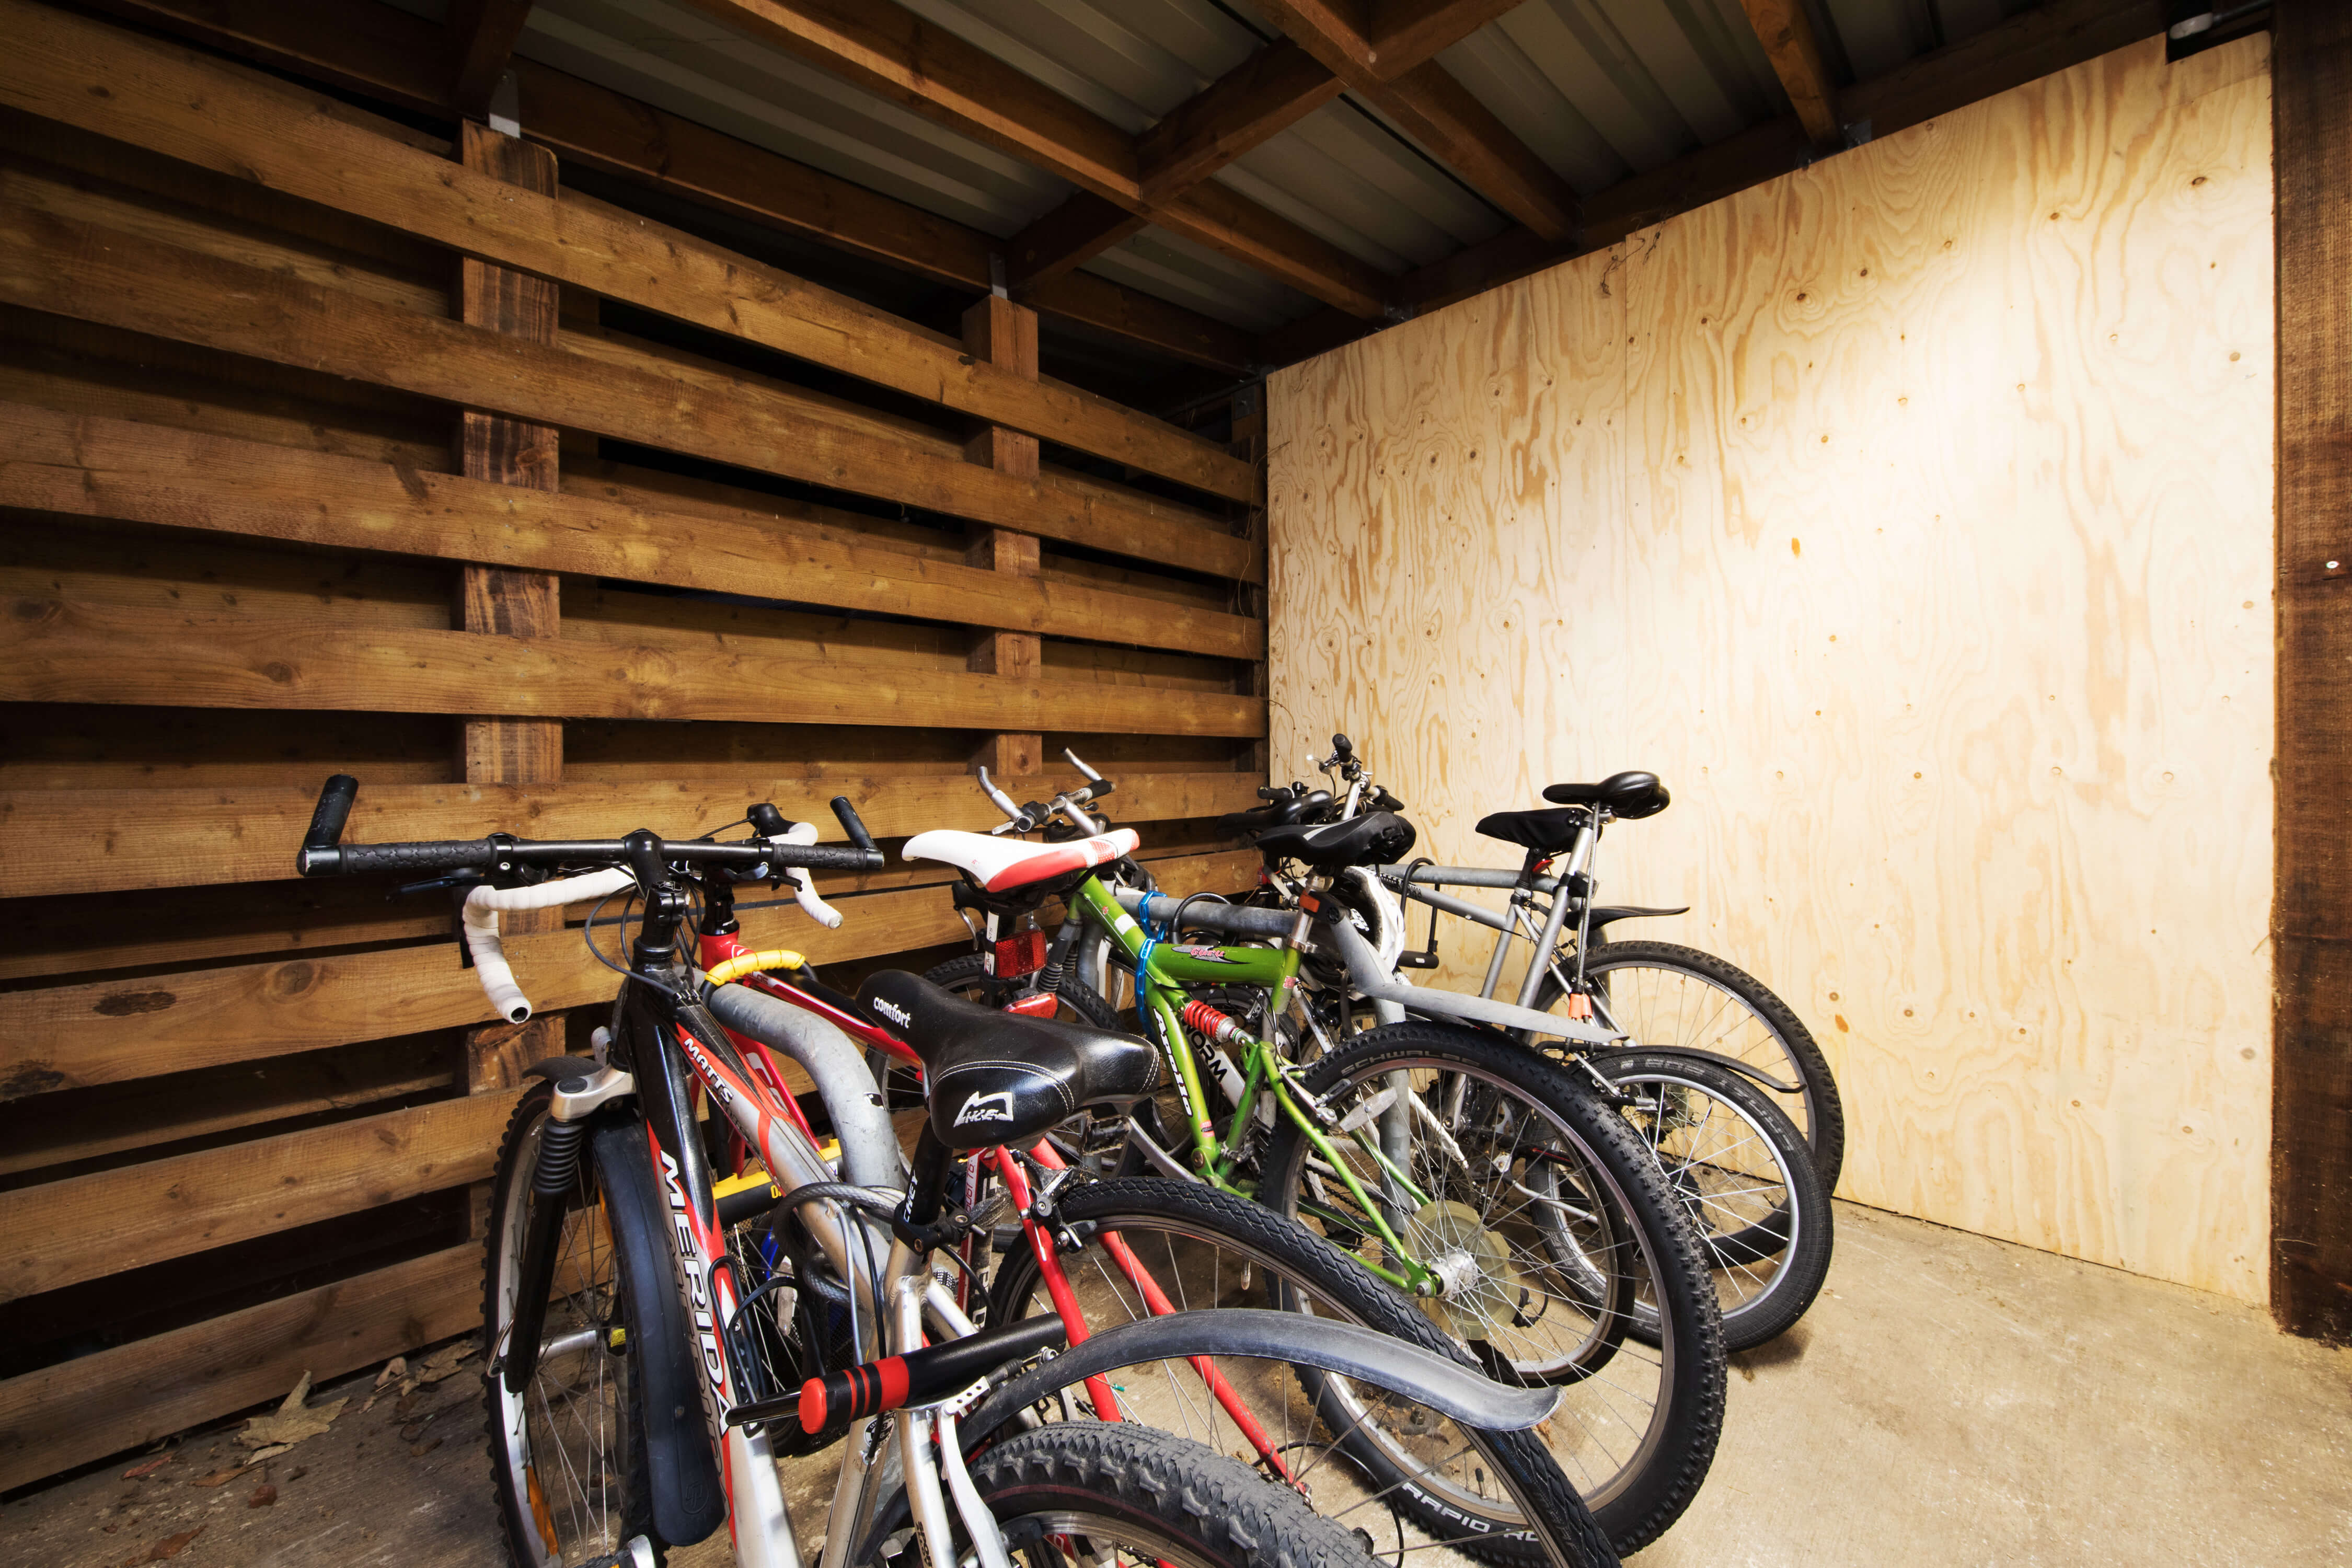 Bike storage area at Station Court